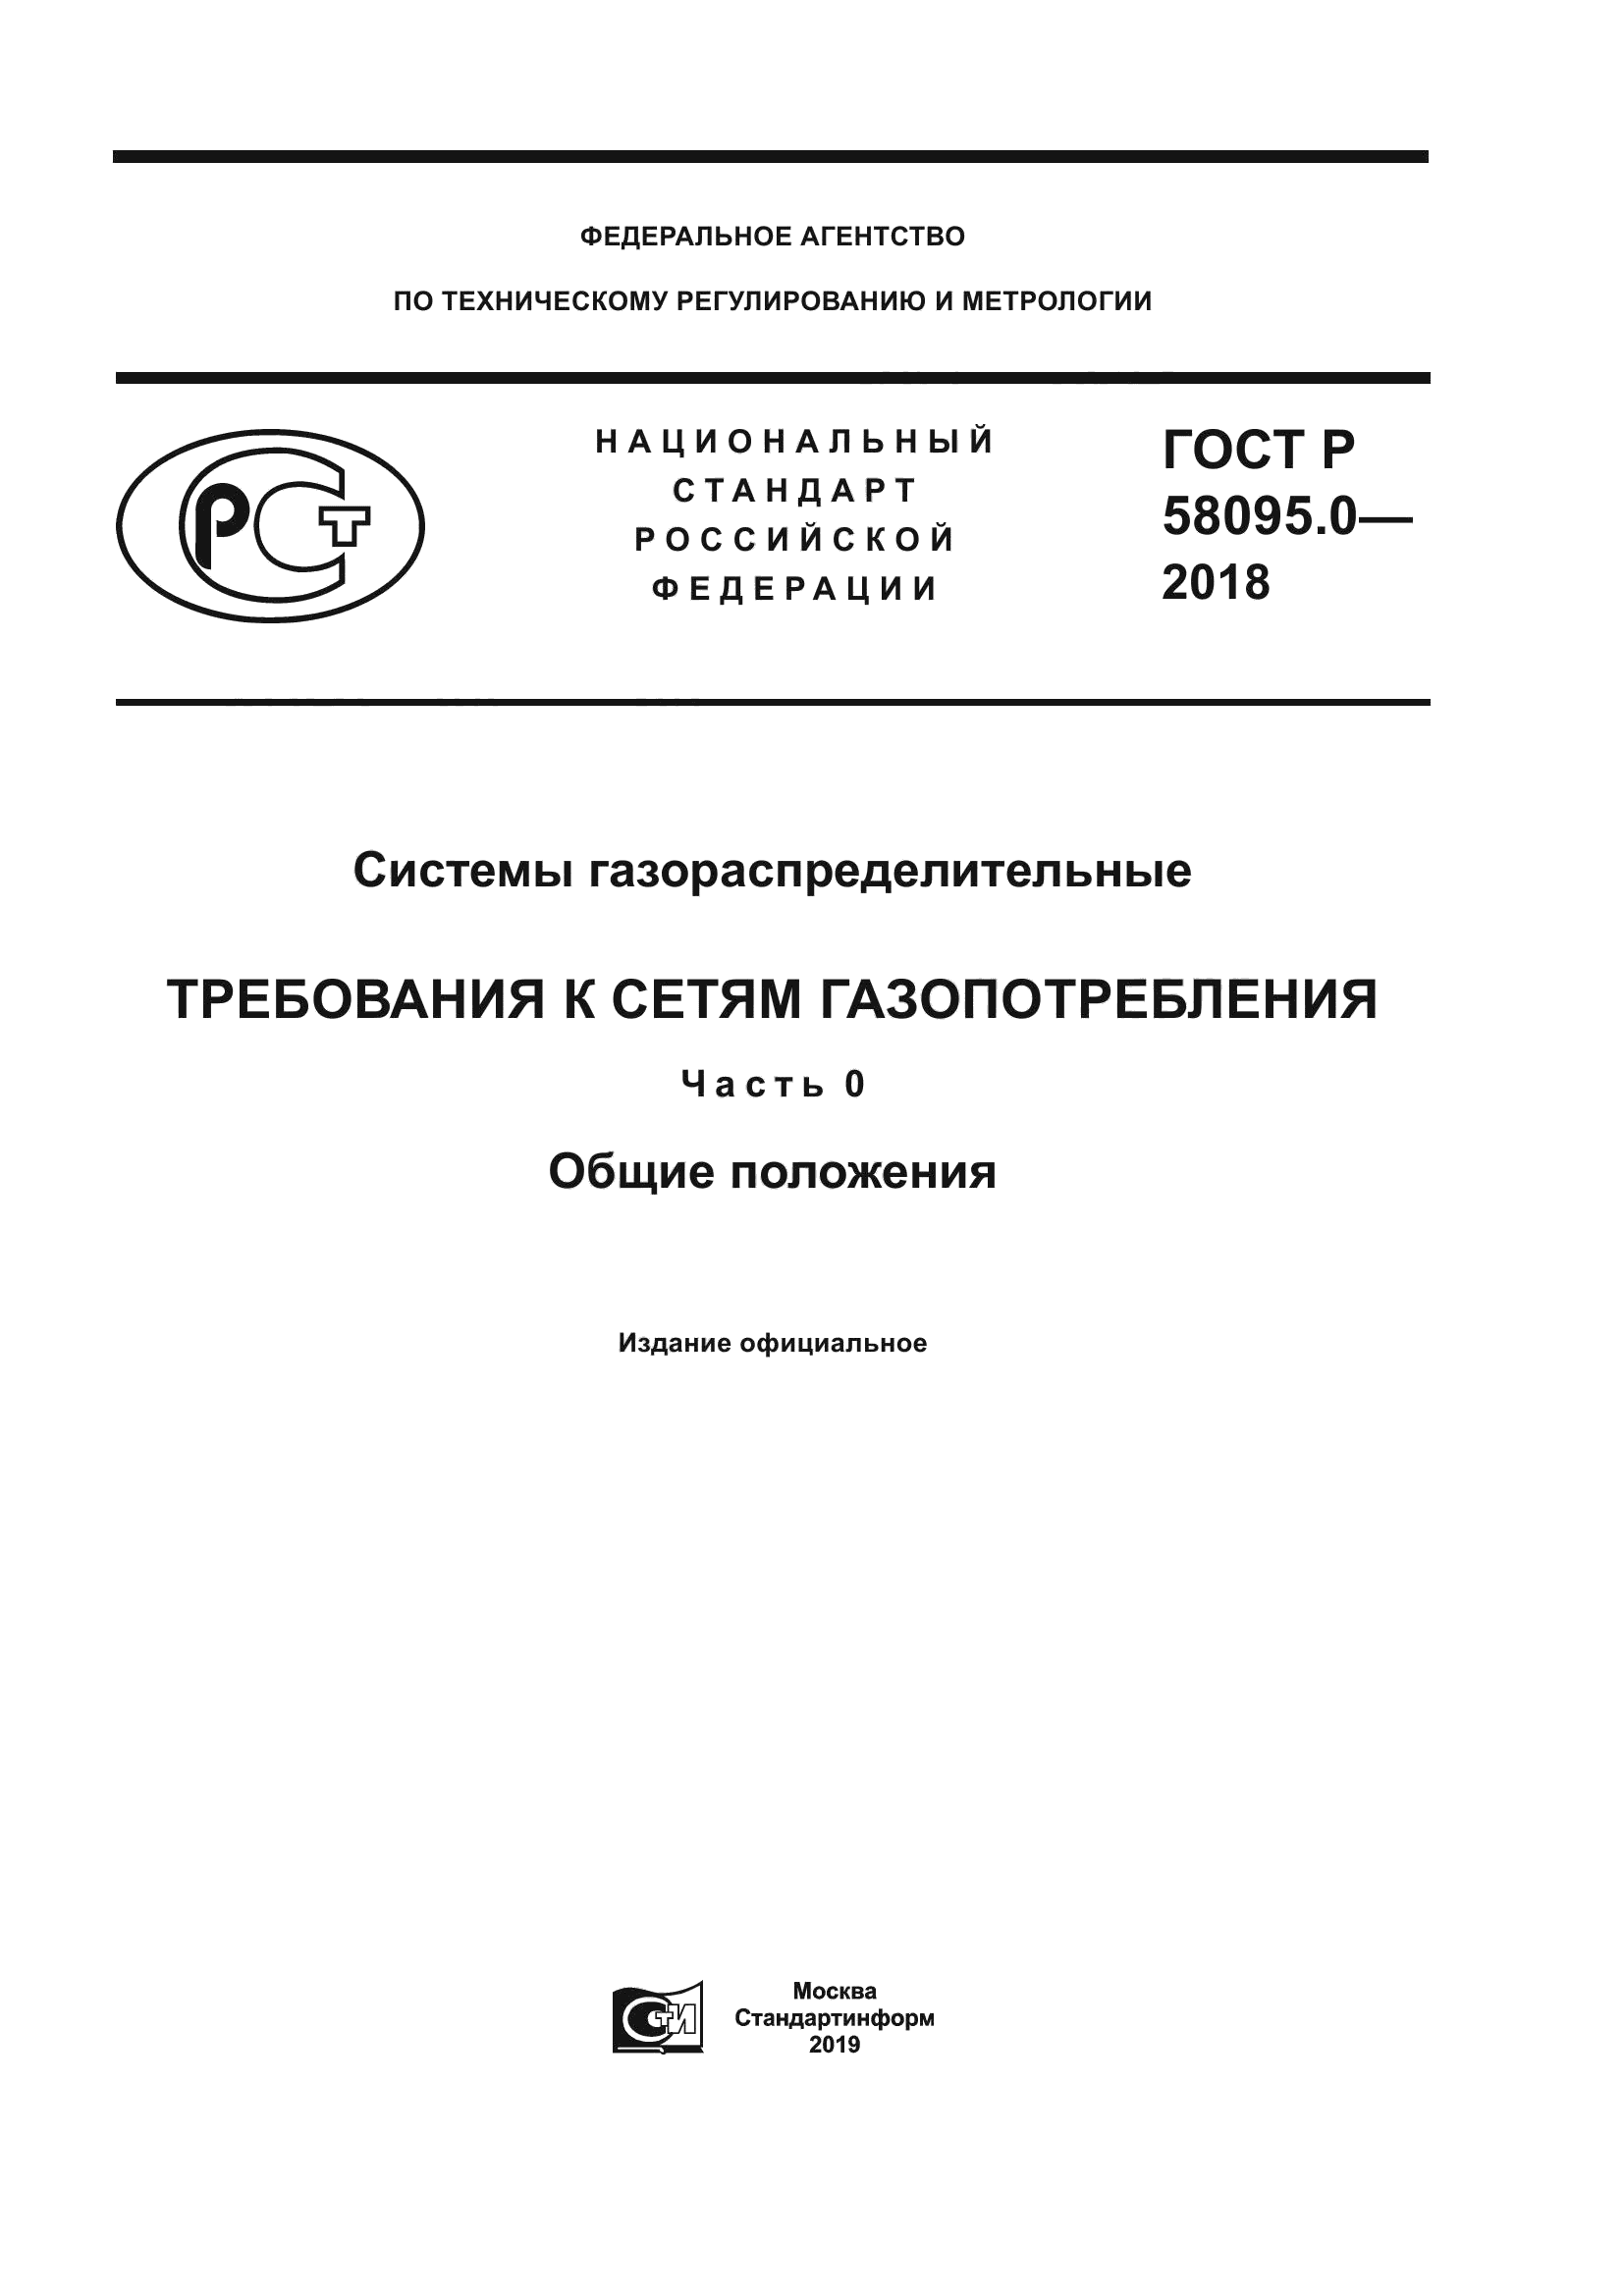 ГОСТ Р 58095.0-2018